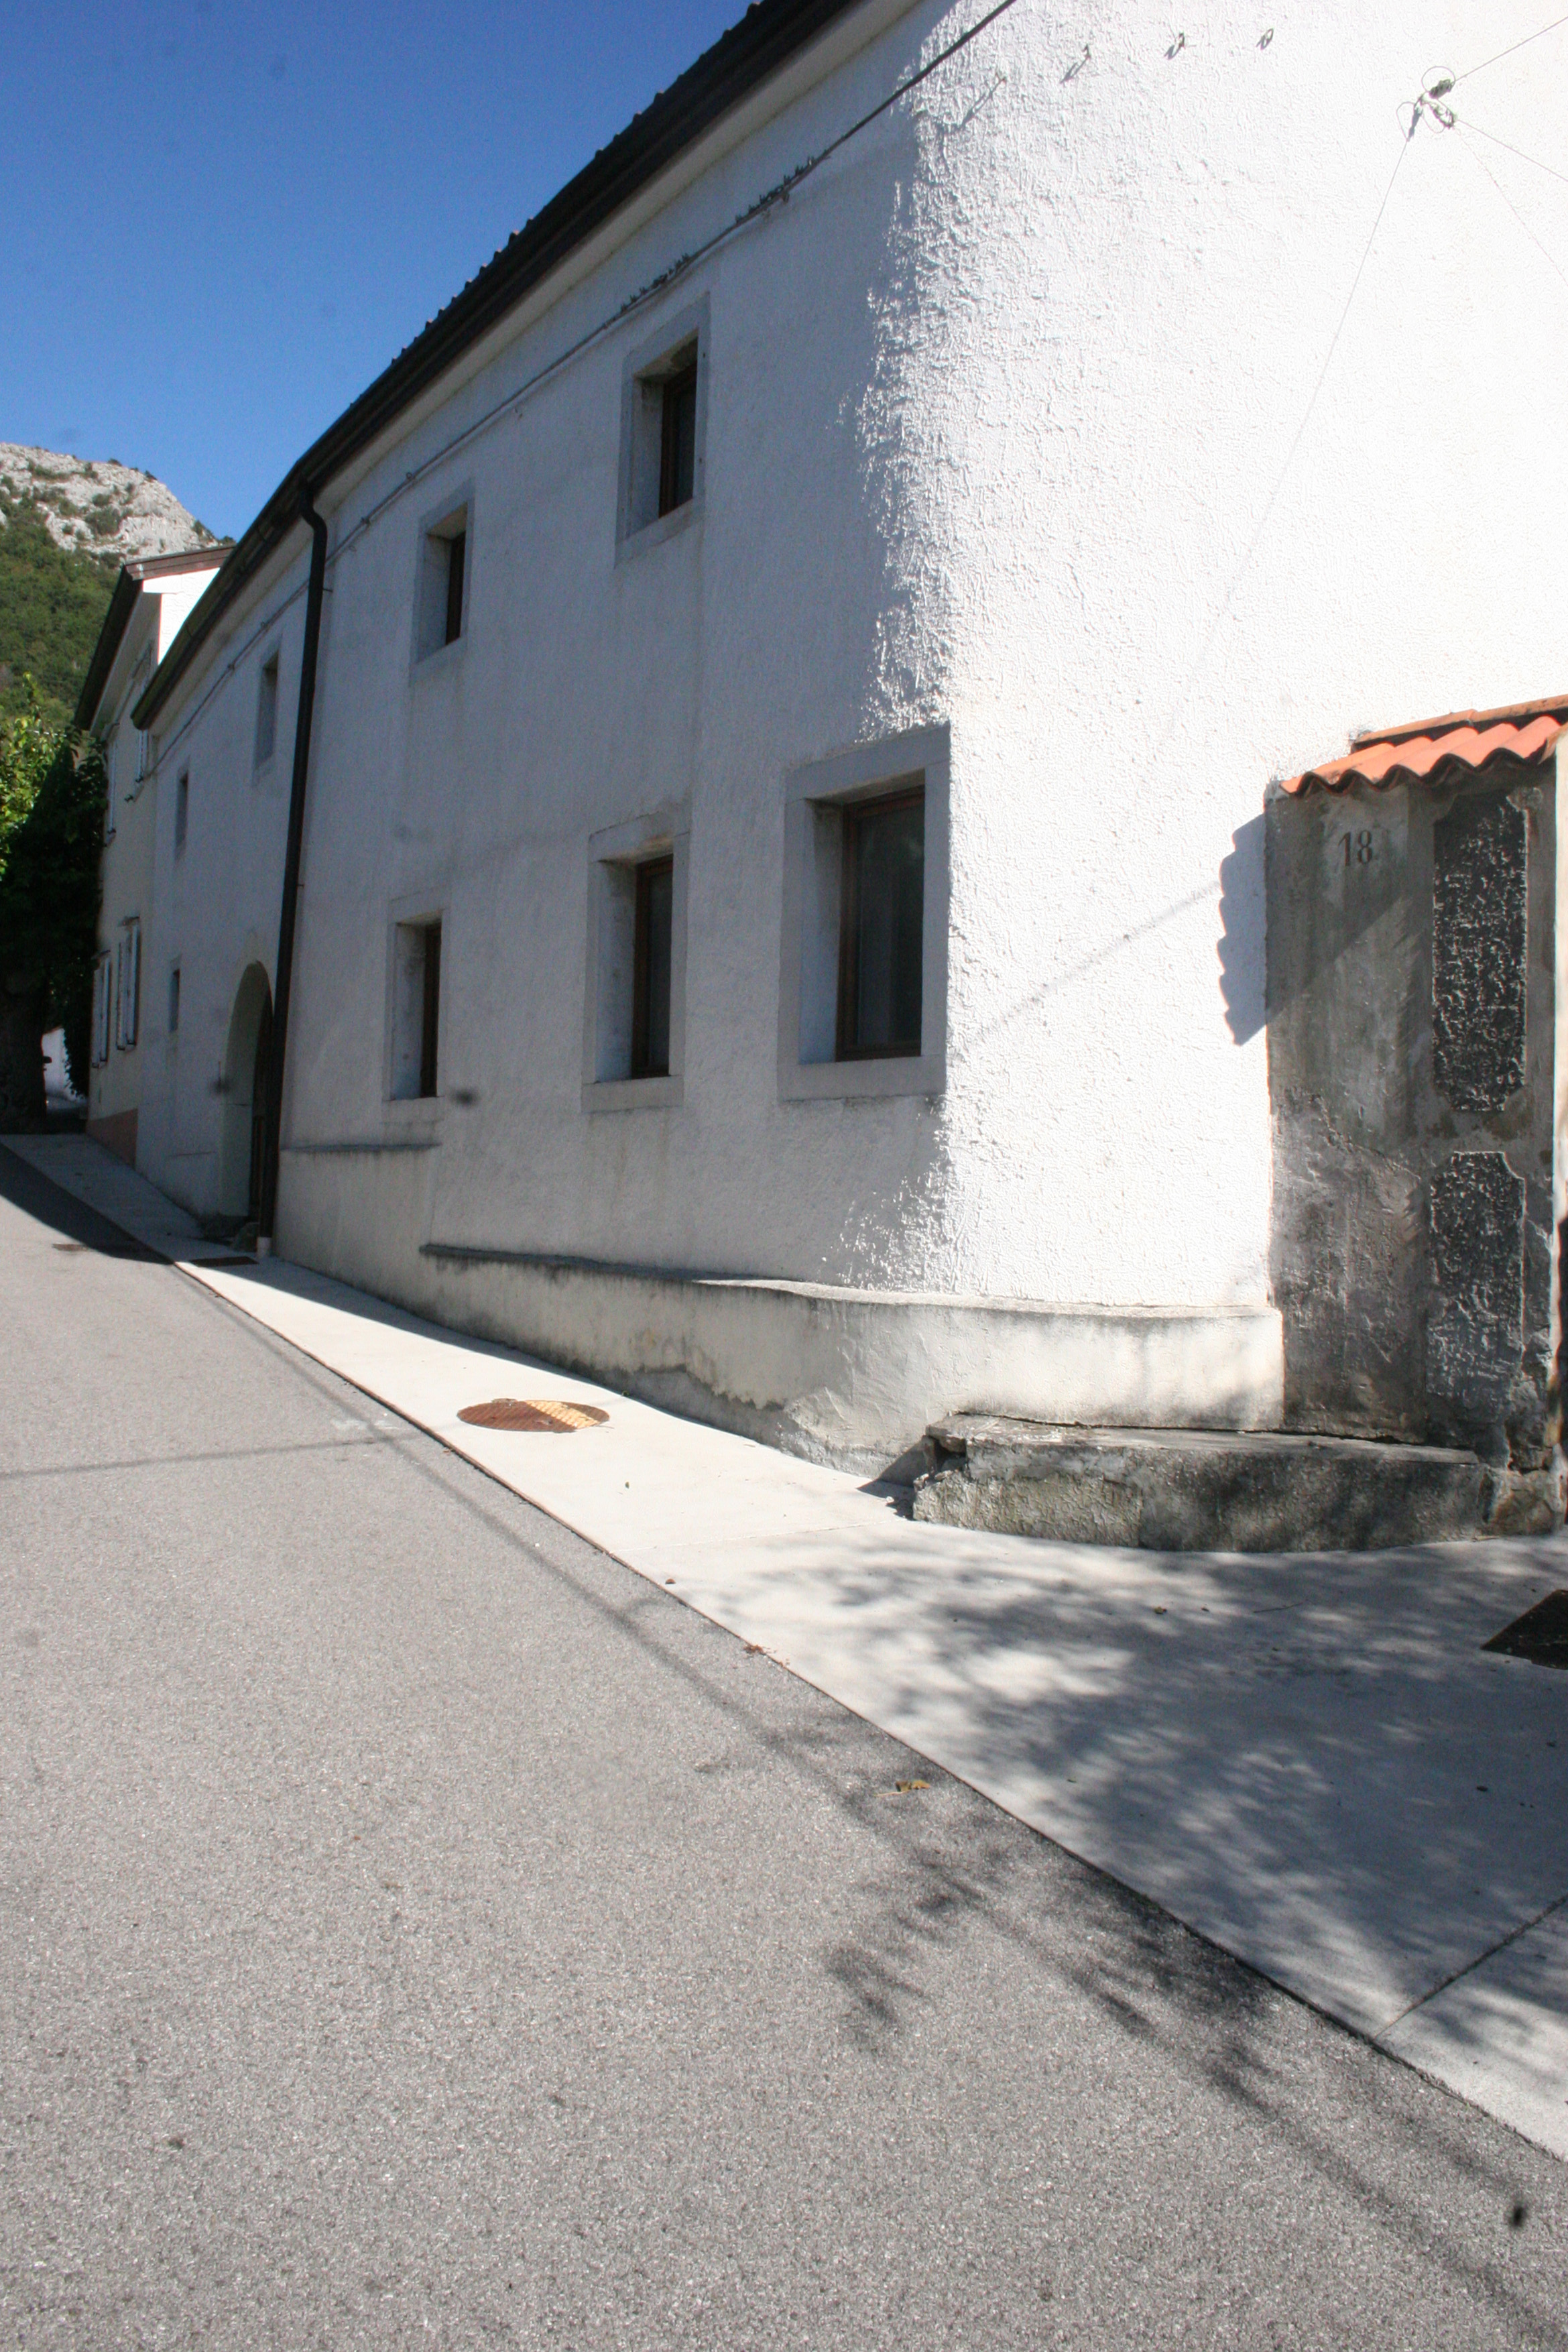 casa rurale su strada (casa) - San Dorligo della Valle (TS) 